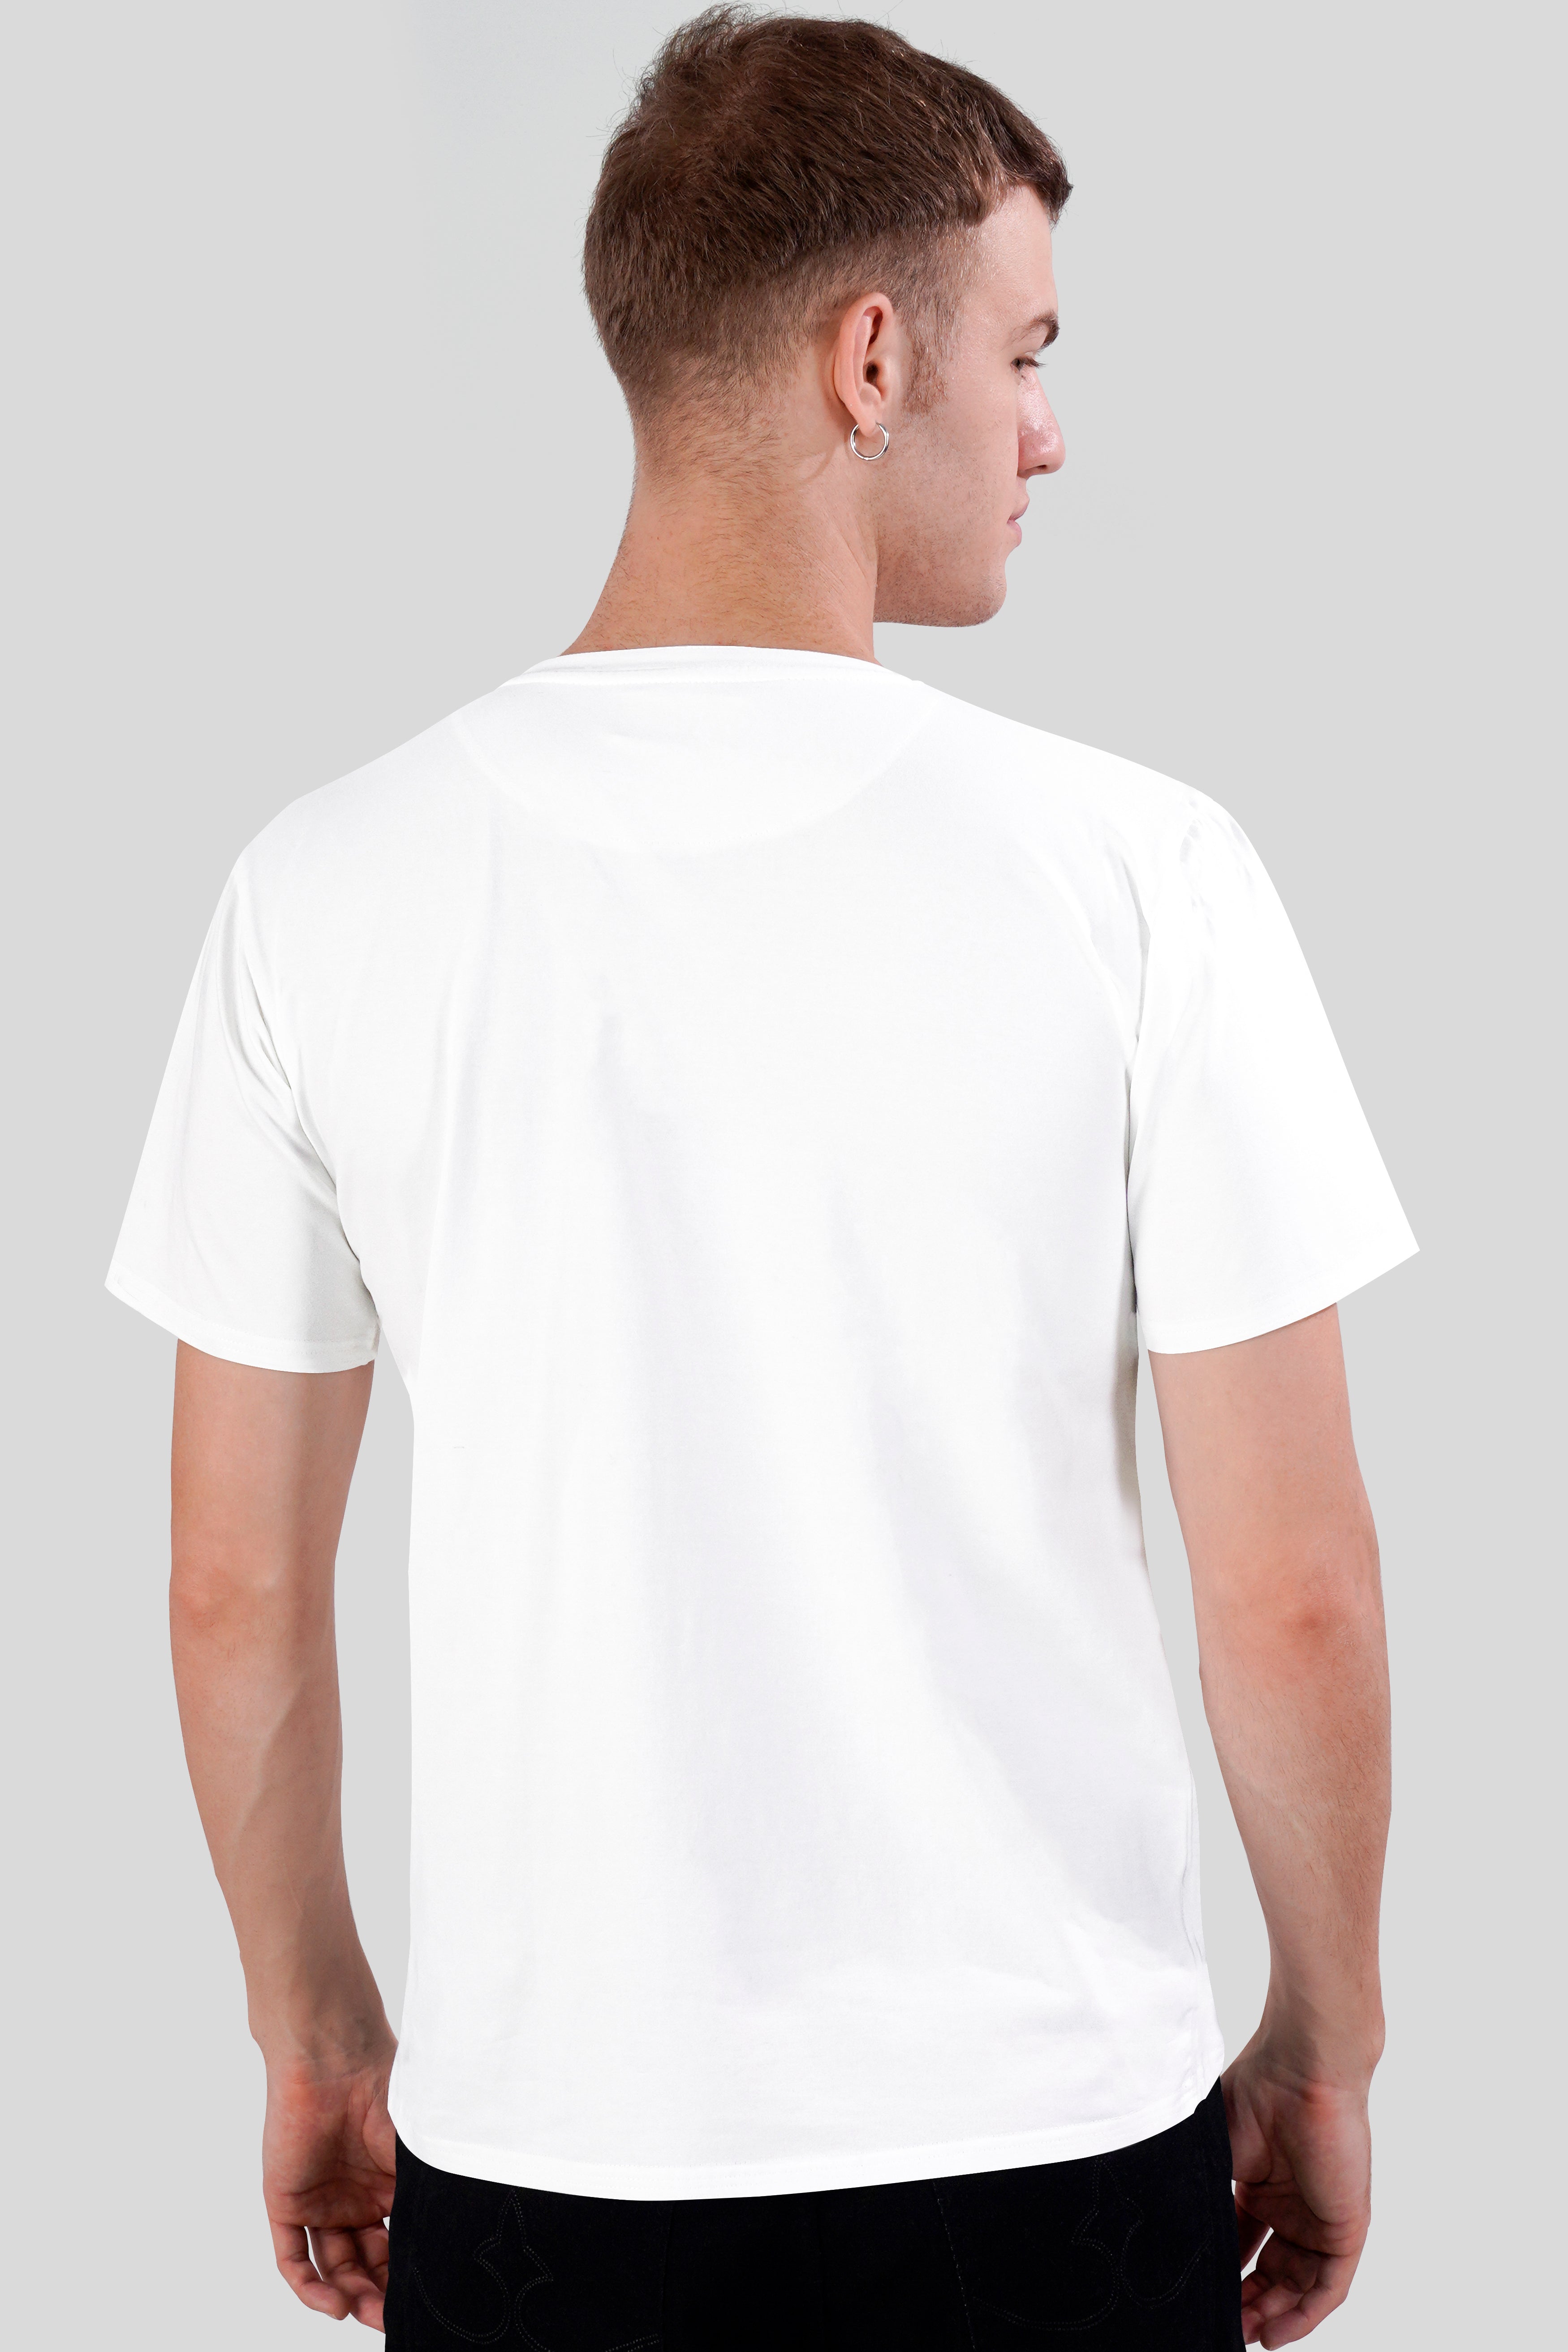 Bright White Printed Premium Cotton T-shirt TS854-W01-RPRT80-S, TS854-W01-RPRT80-M, TS854-W01-RPRT80-L, TS854-W01-RPRT80-XL, TS854-W01-RPRT80-XXL